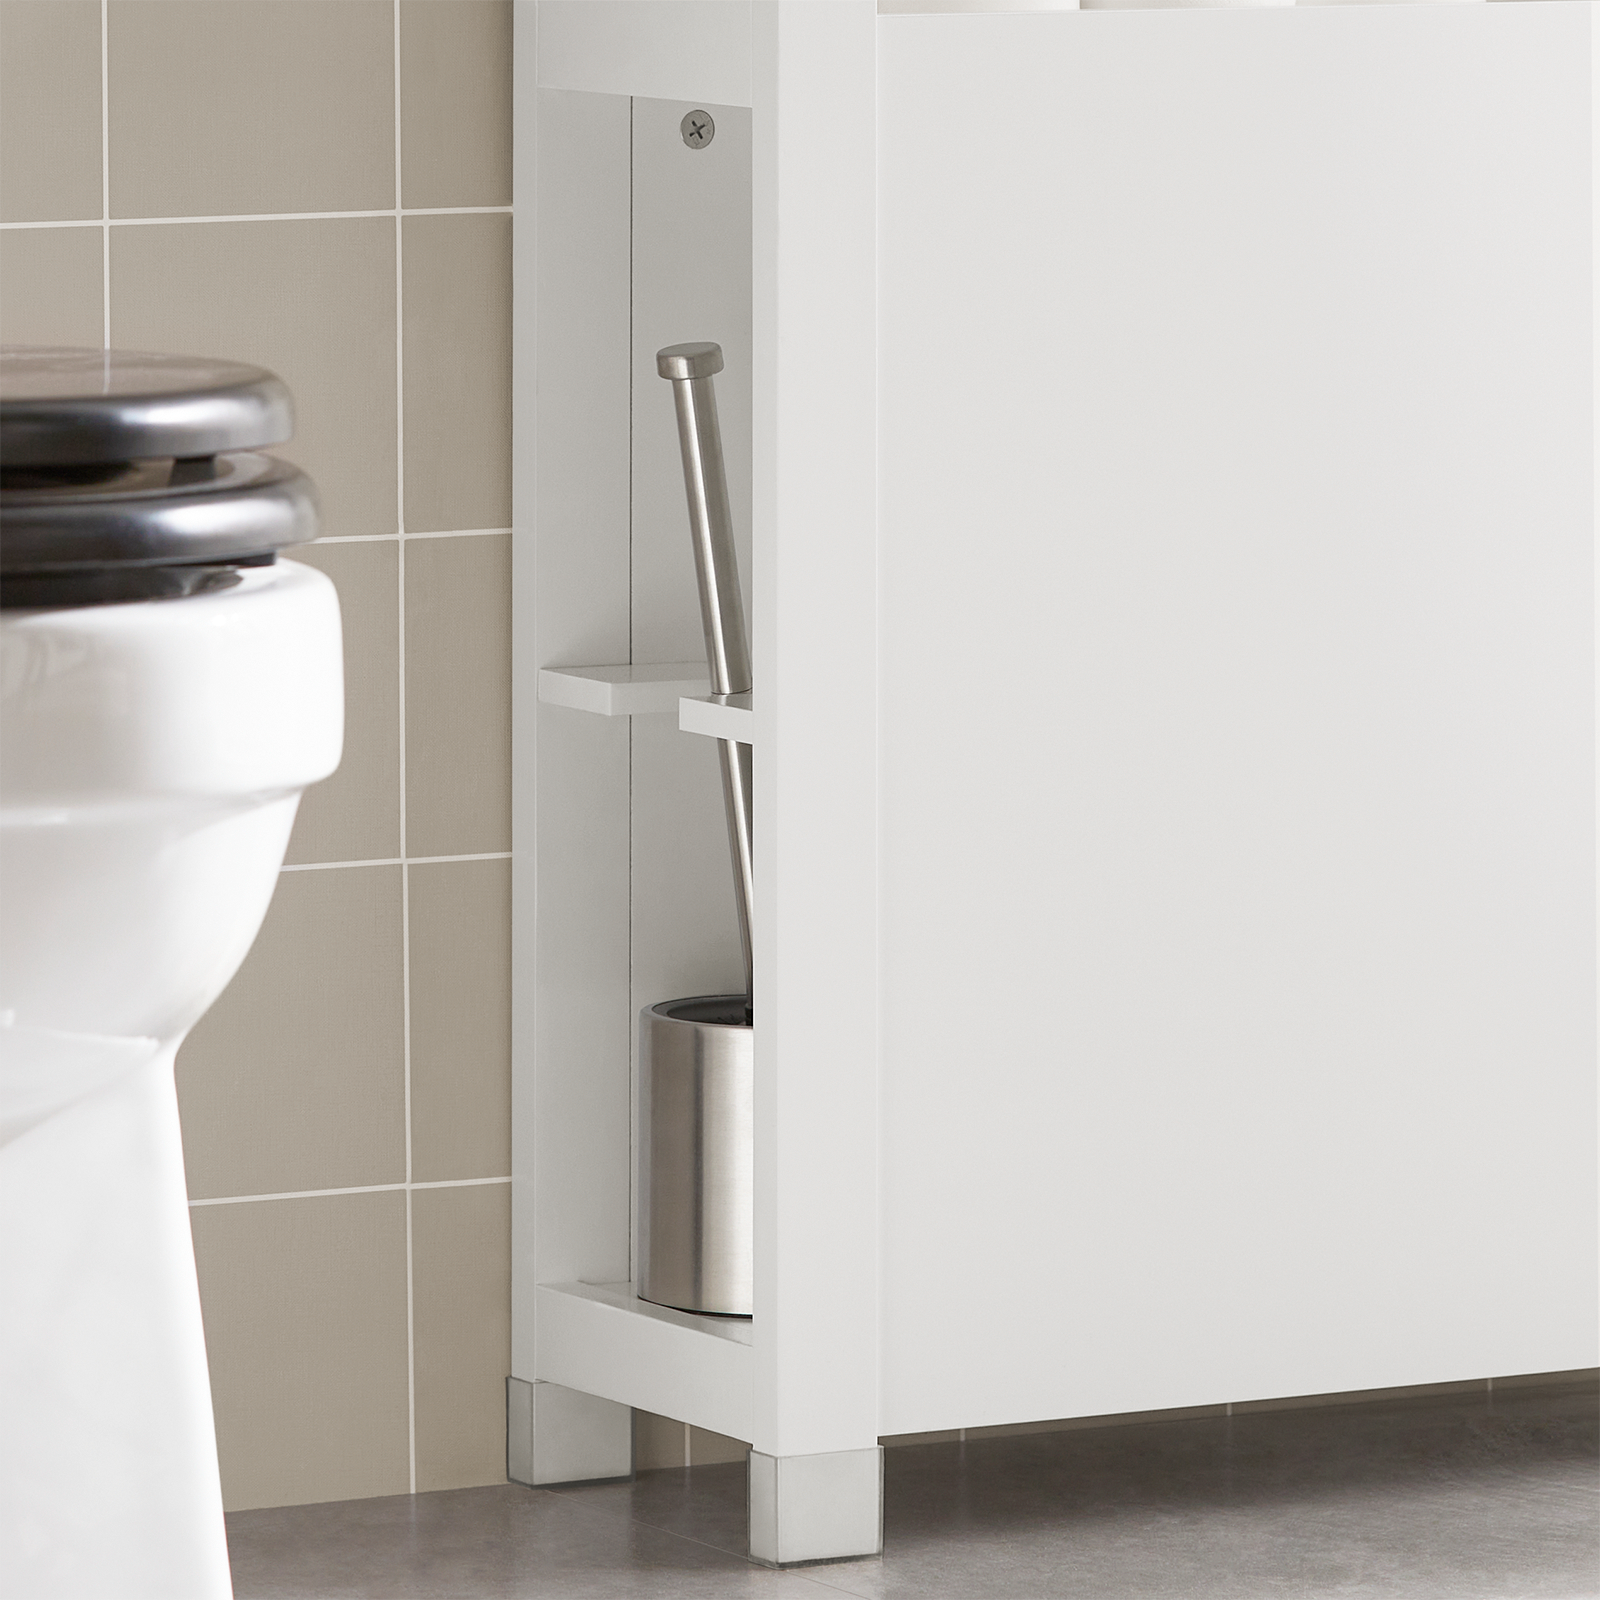 SoBuy BZR83-W Bathroom Cabinet Storage Cabinet Bathroom Toilet Paper Roll Holder